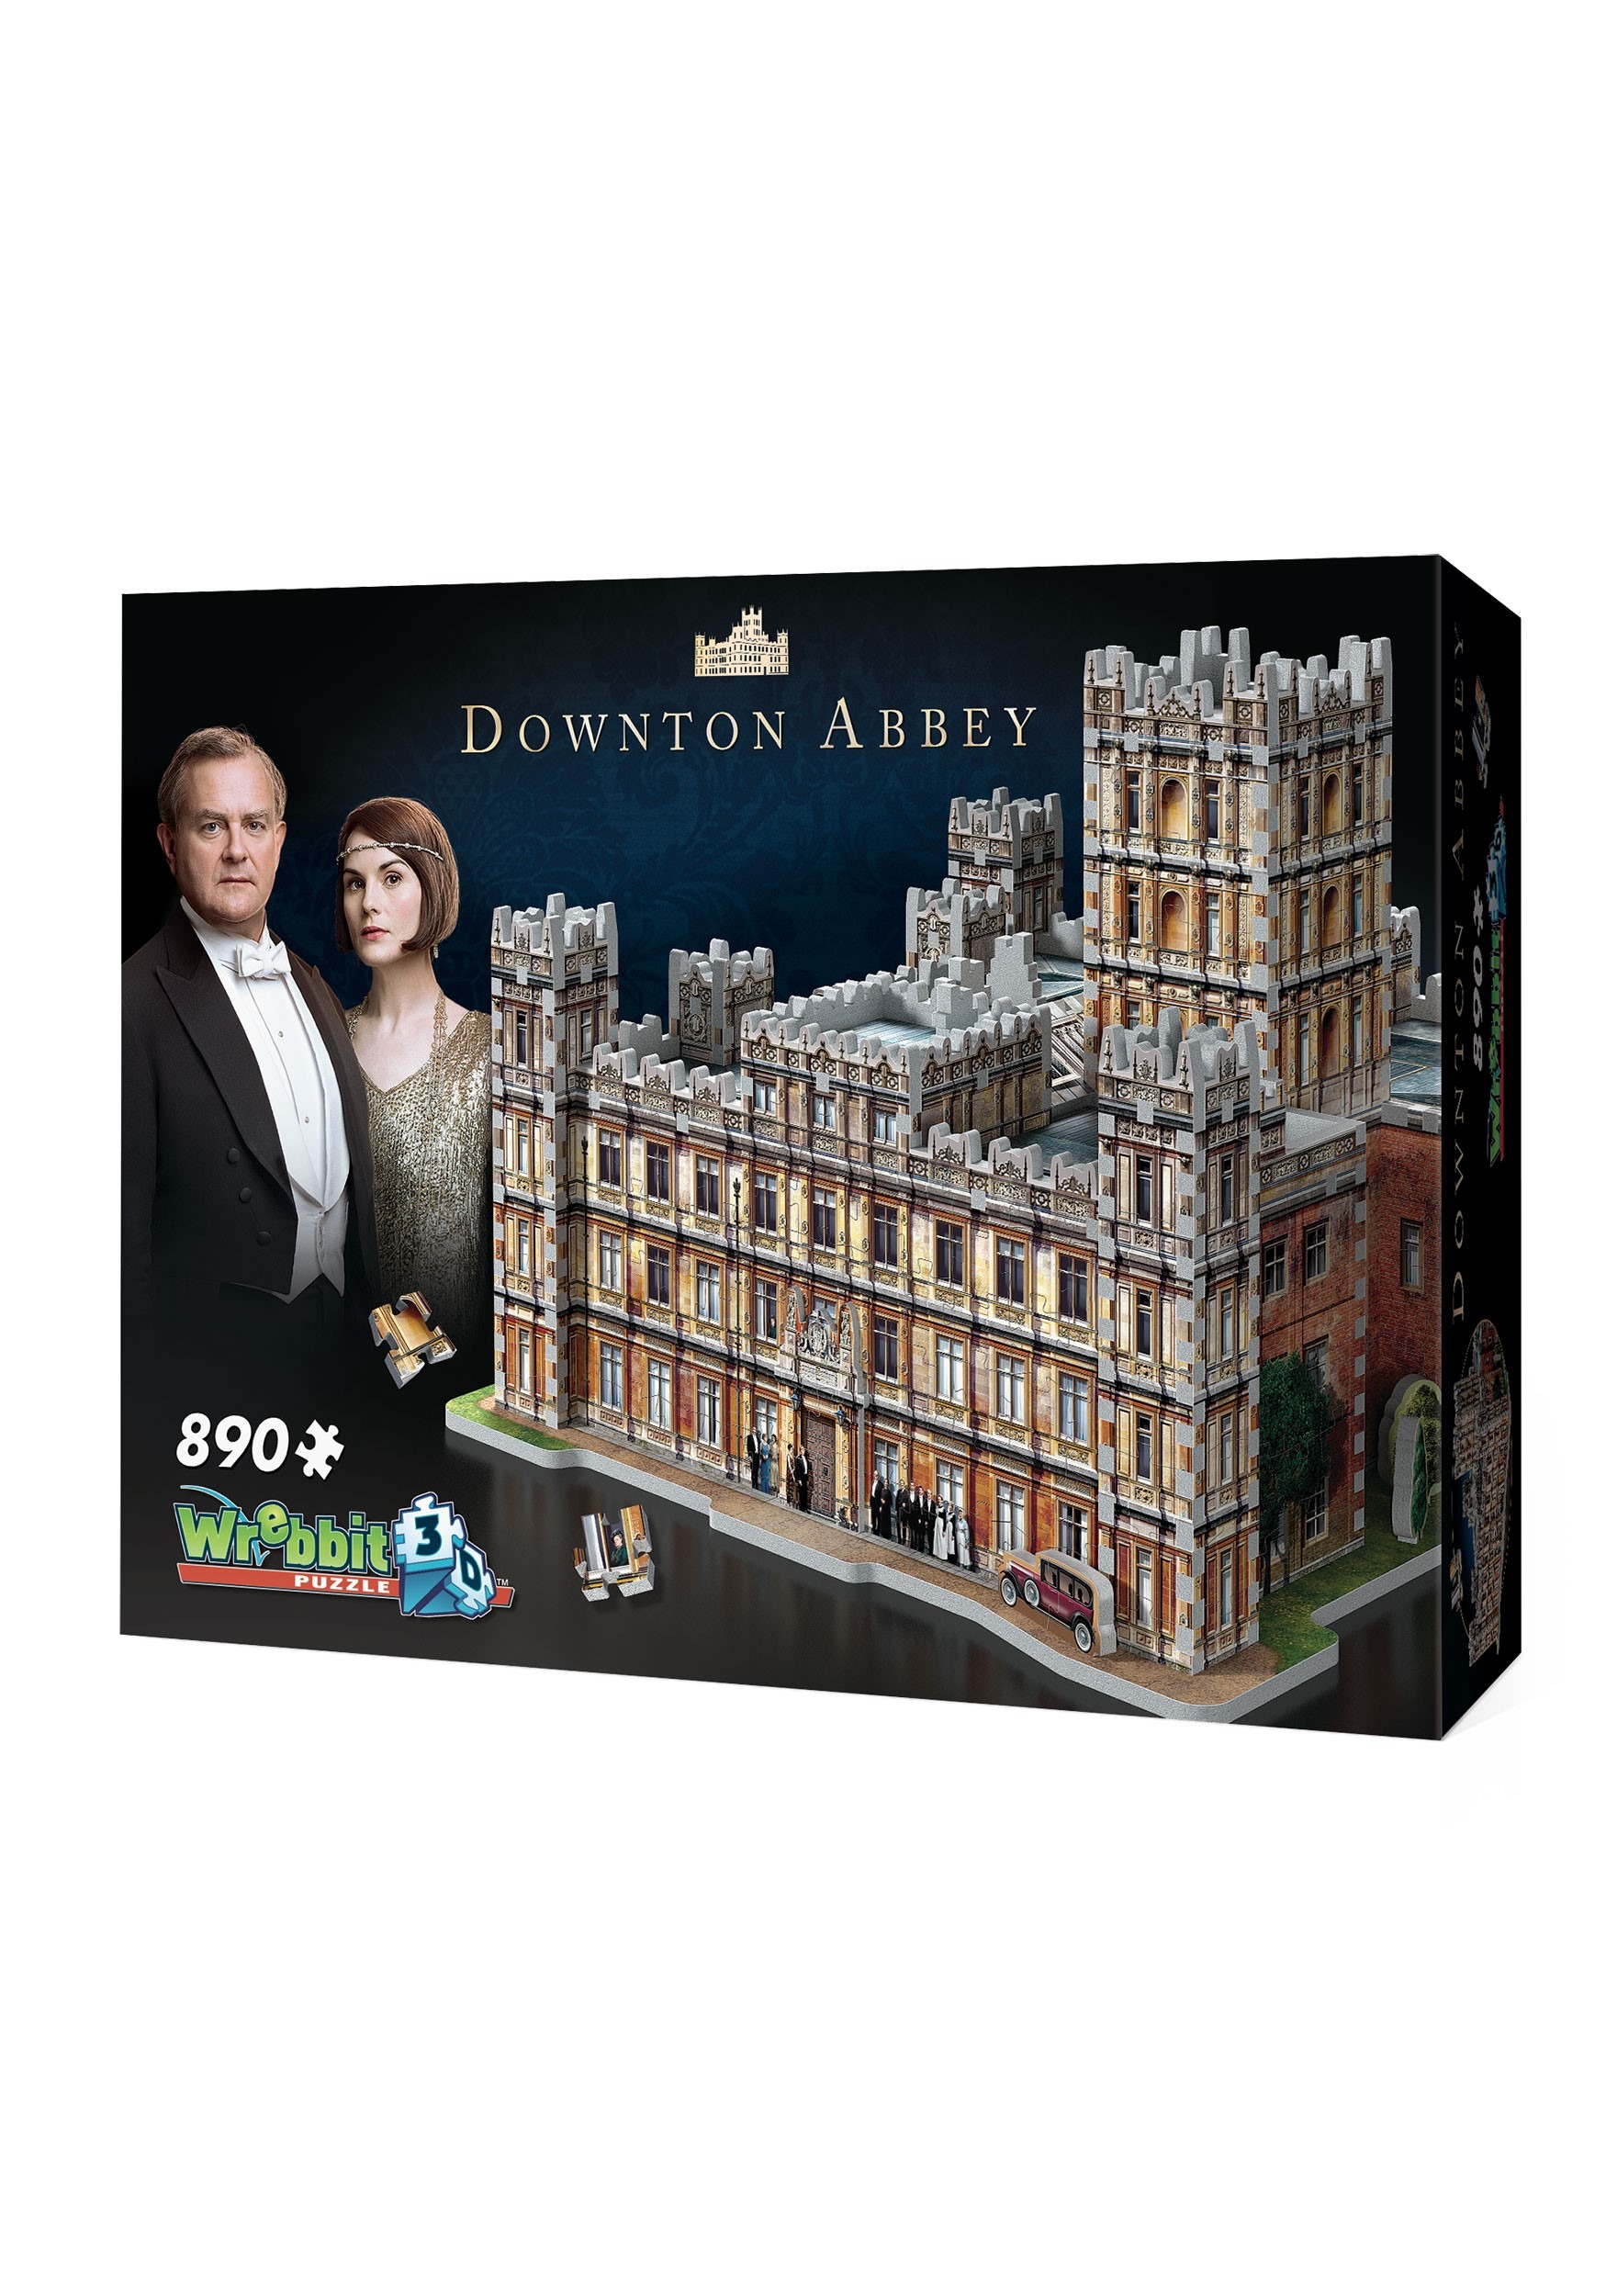 Downton Abbey 3D 890 pc Jigsaw Puzzle